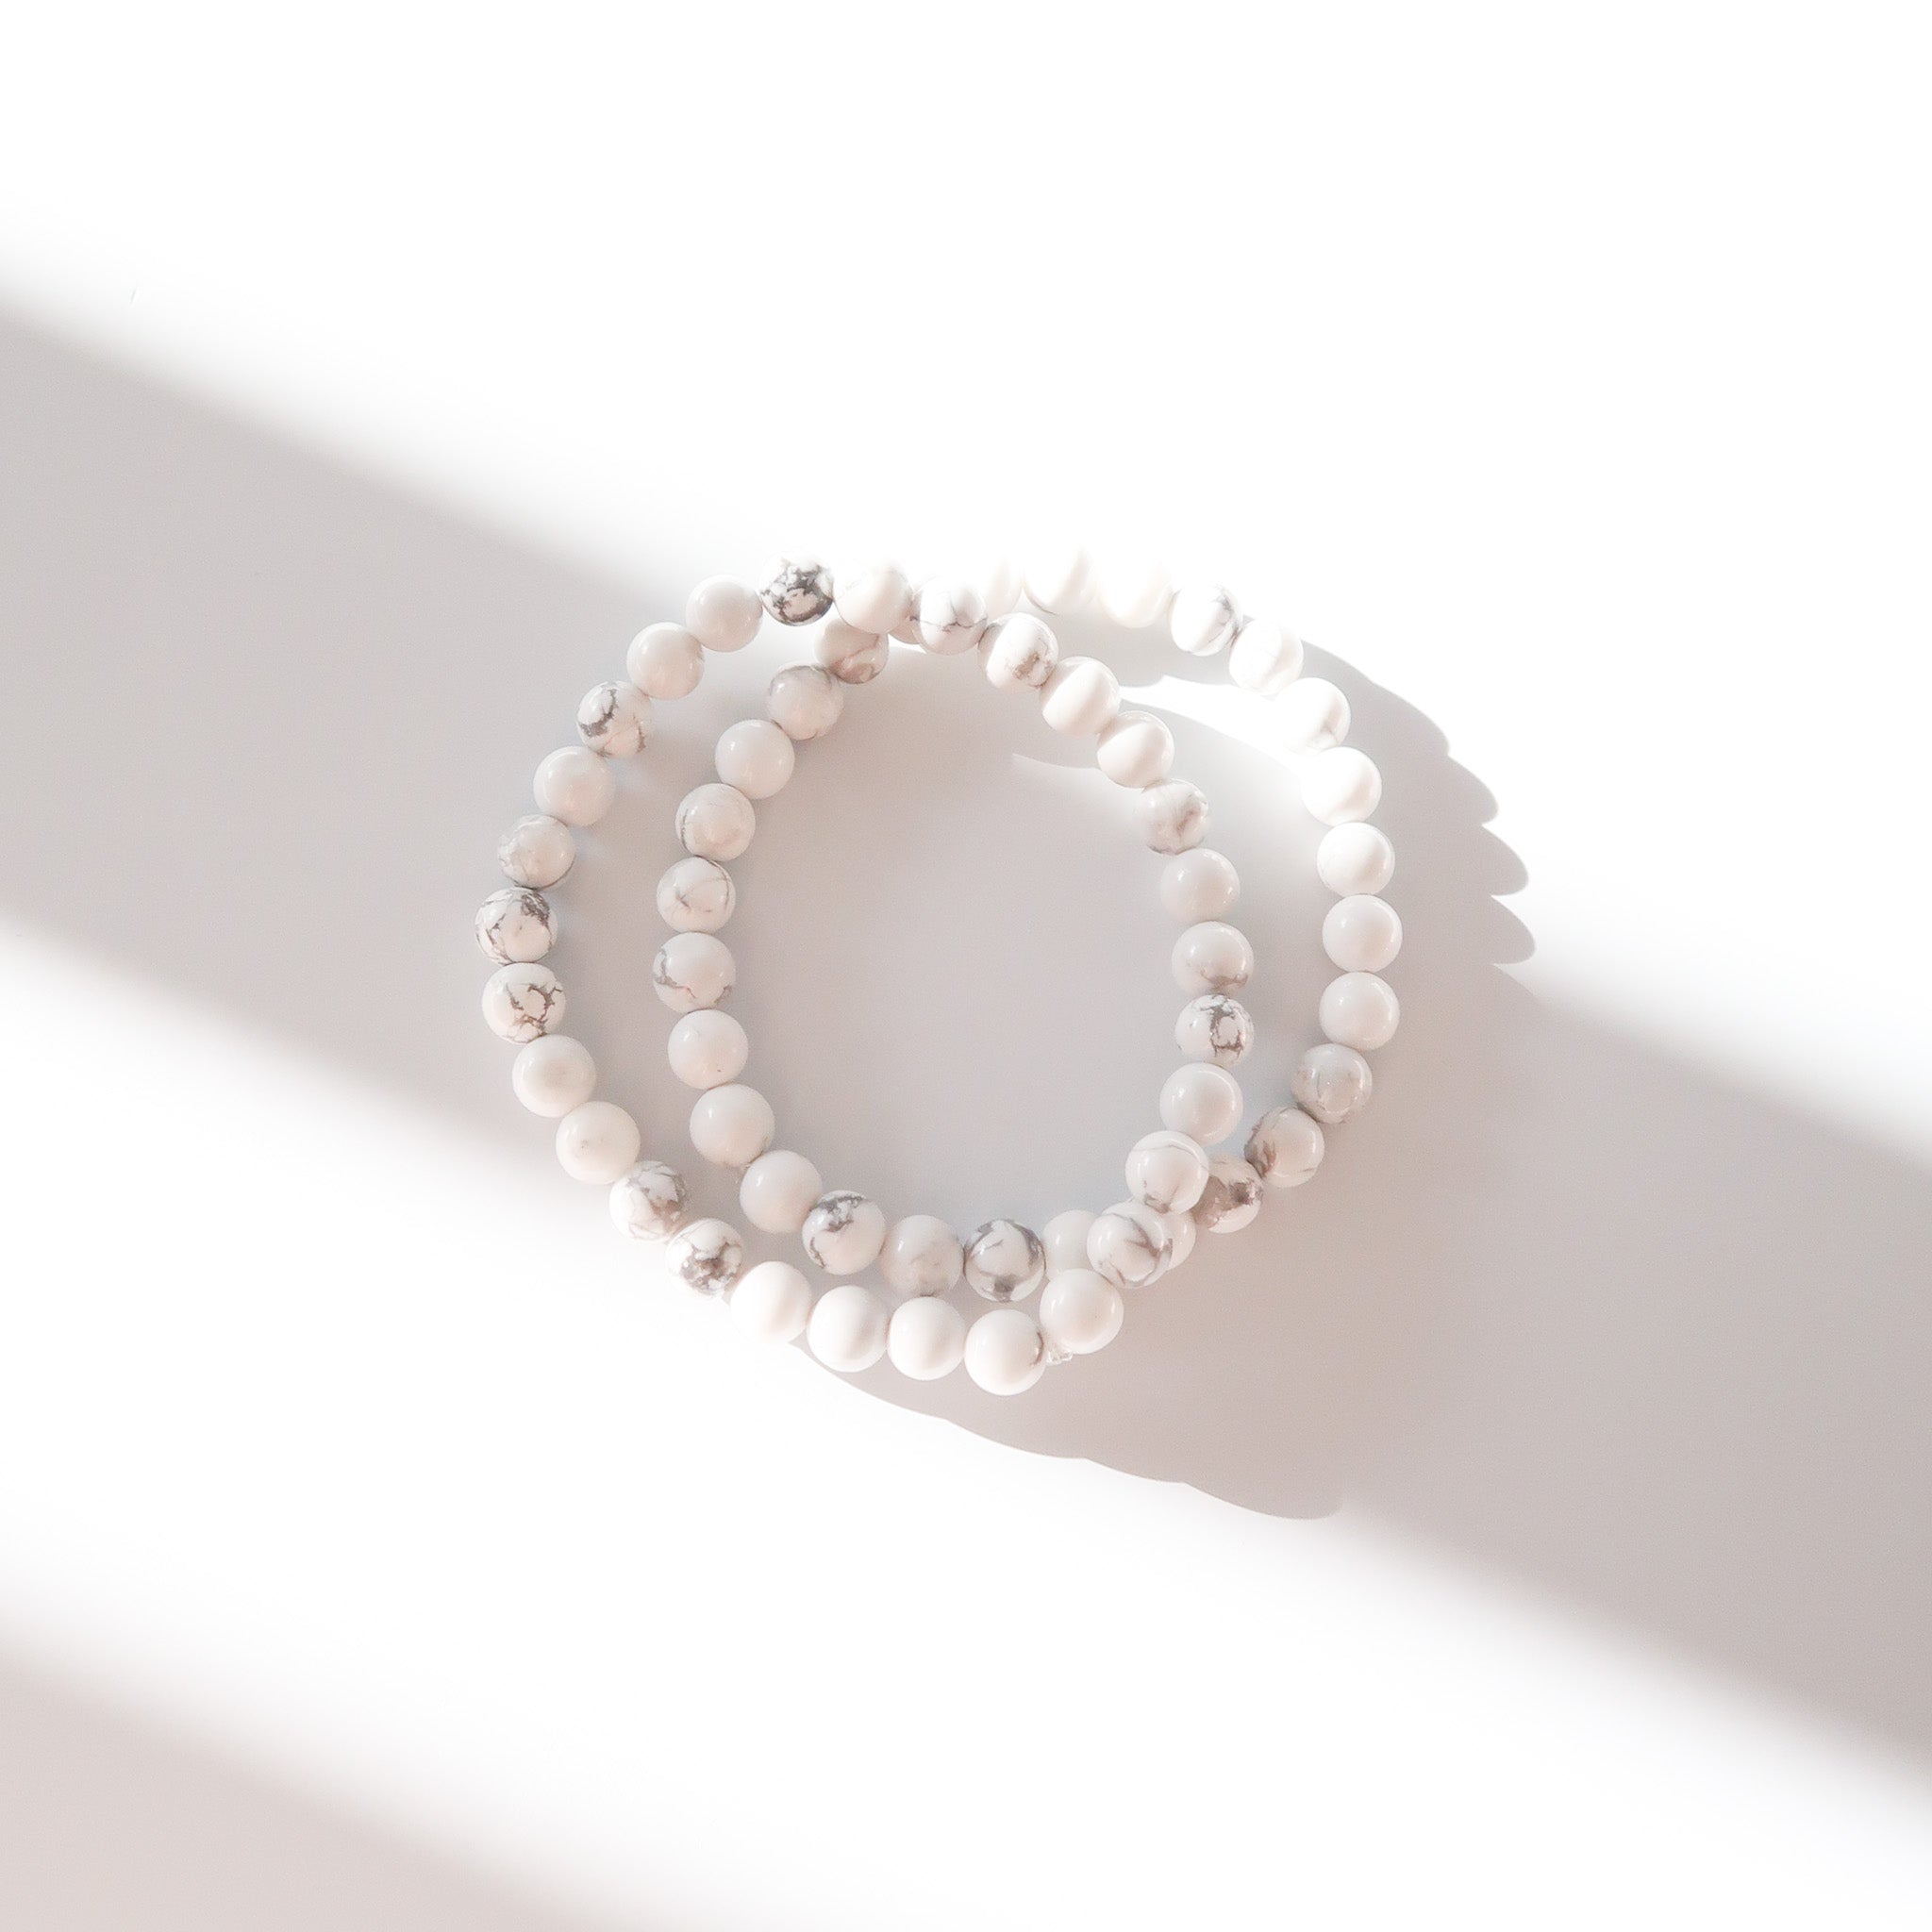 Polished Howlite Crystal Bracelets on a white background